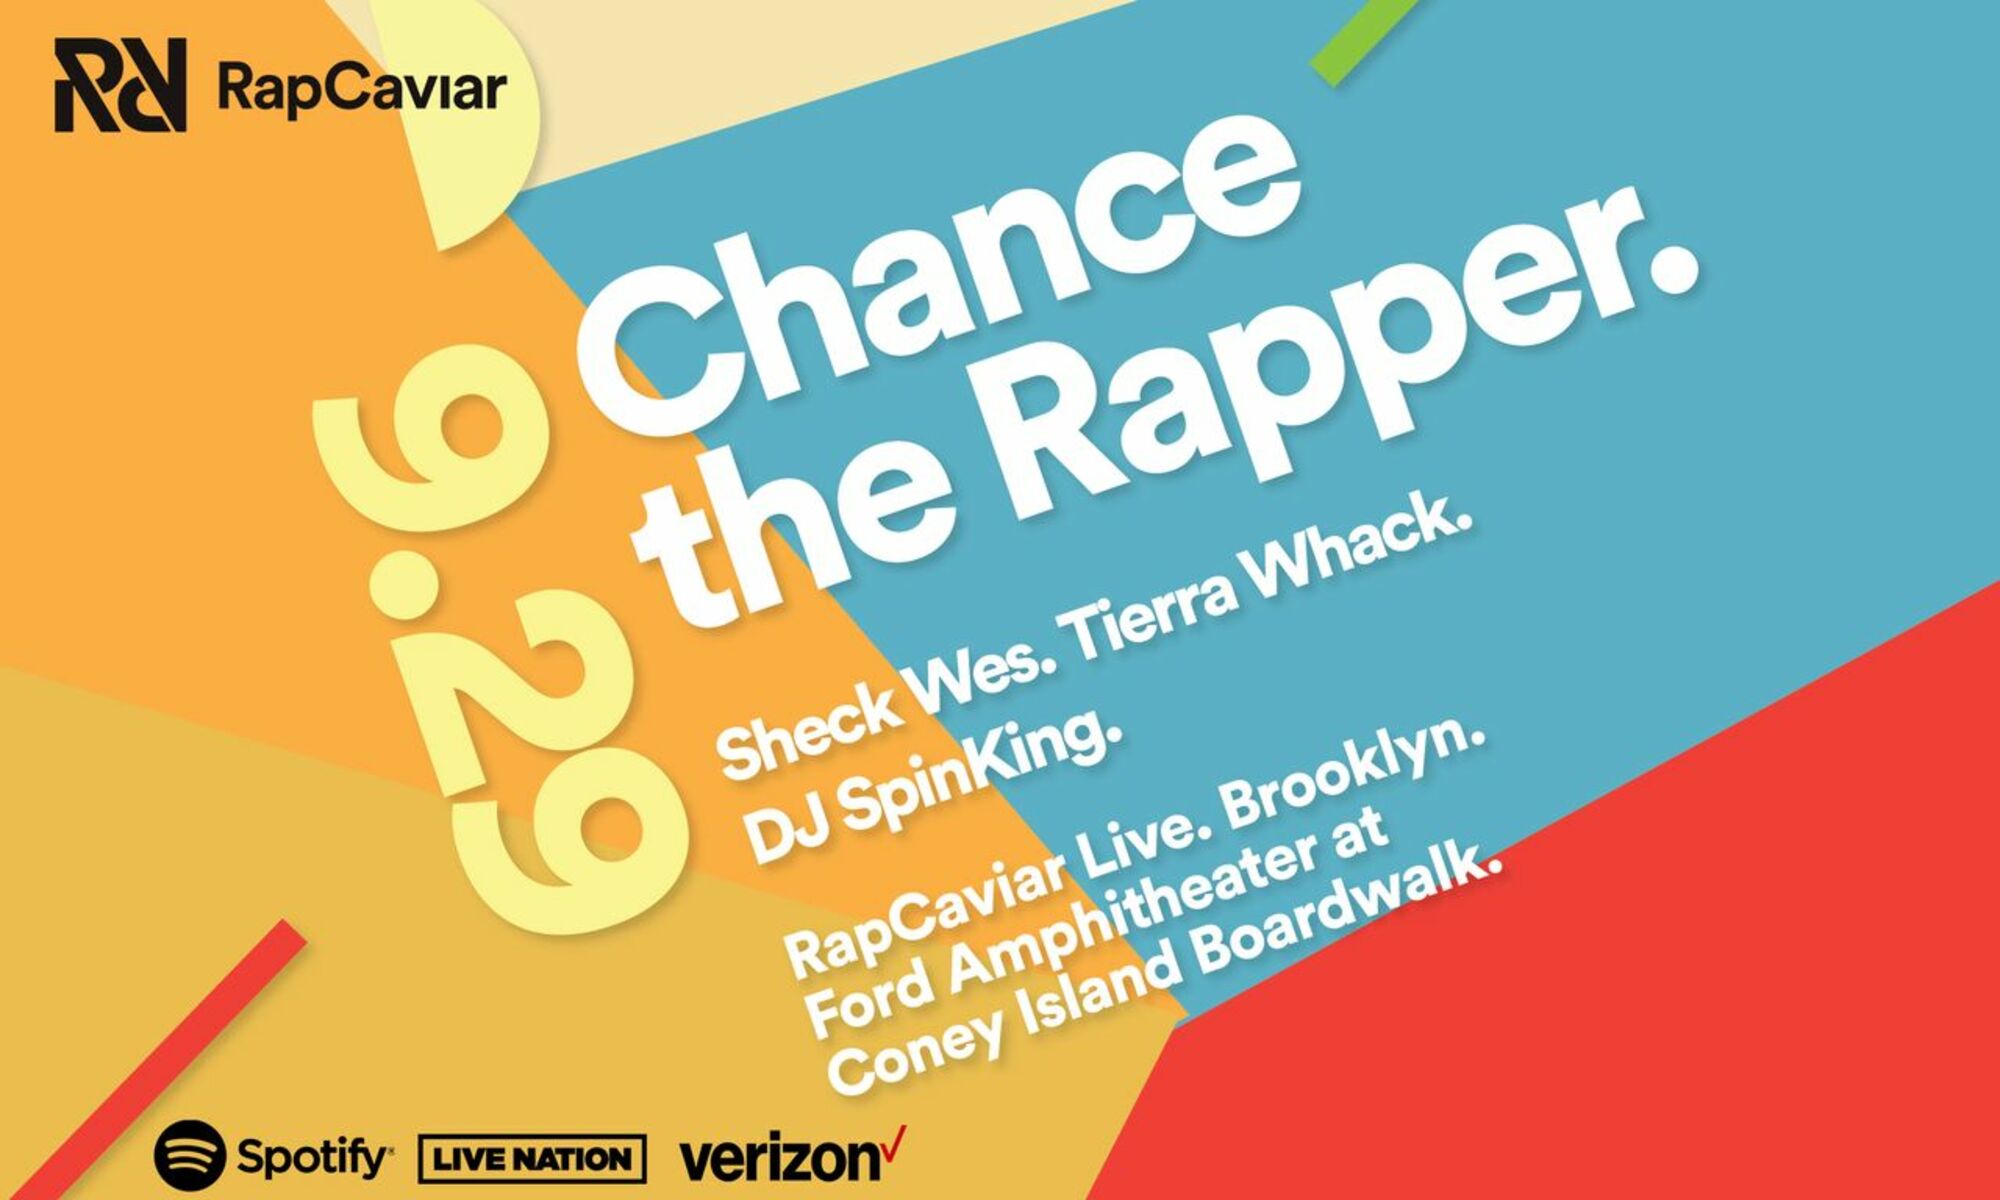 RapCaviar featuring Chance The Rapper Live Concert